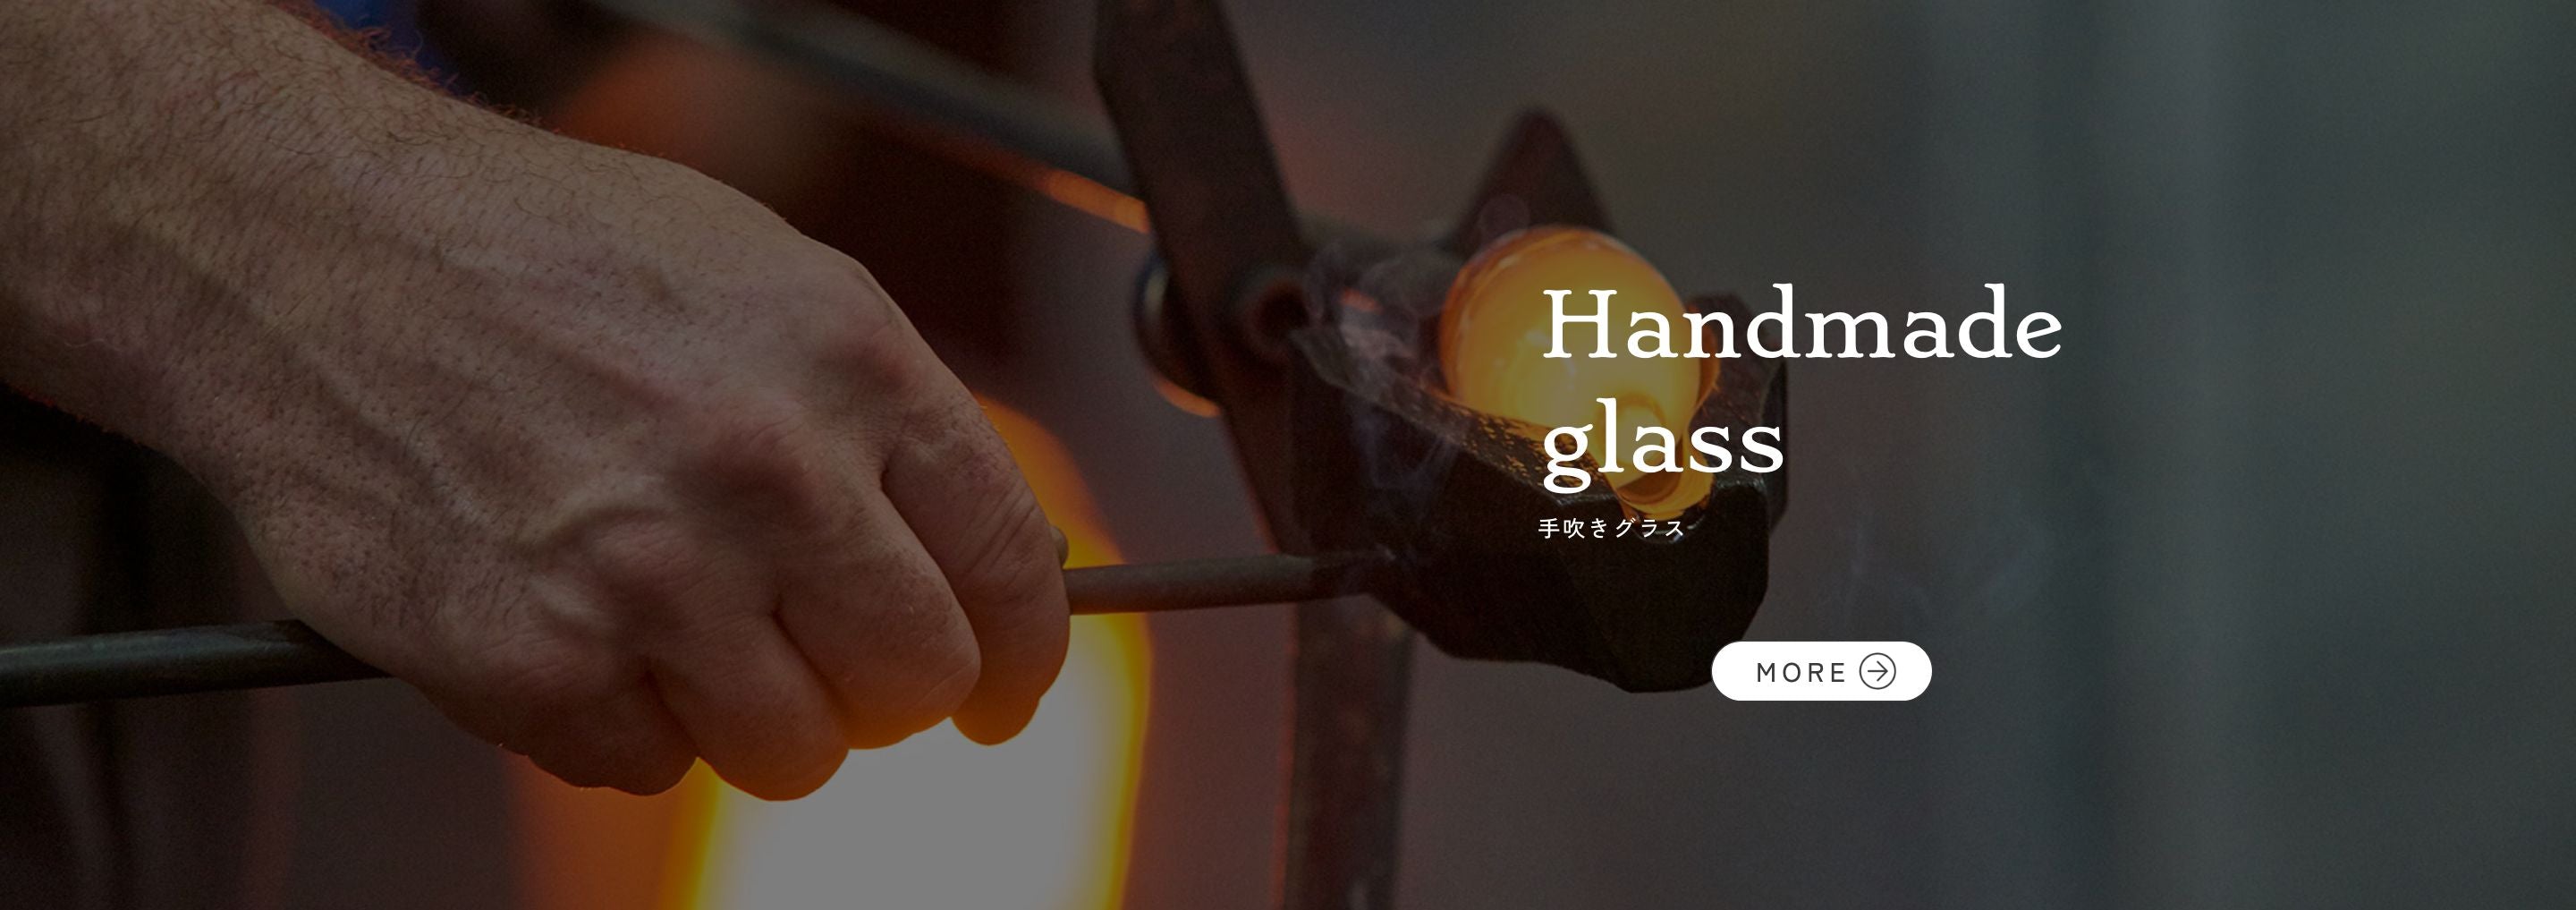 Handmade glass